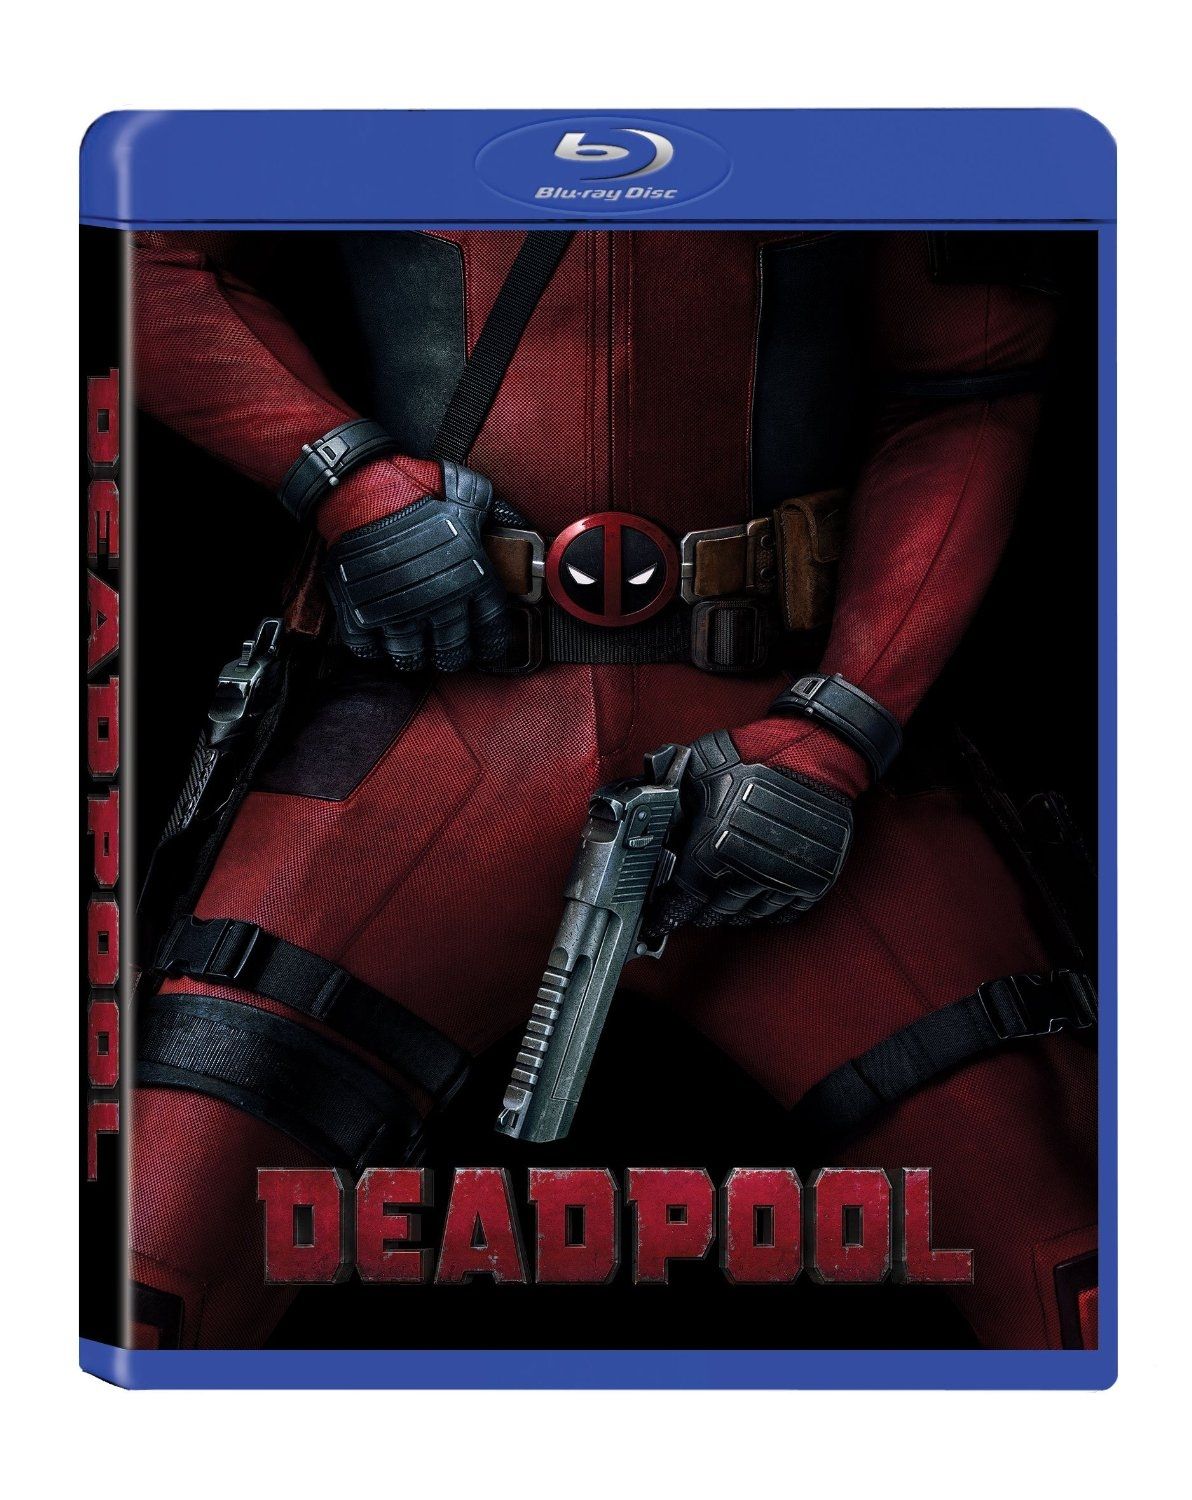 Deadpool Blu-ray cover